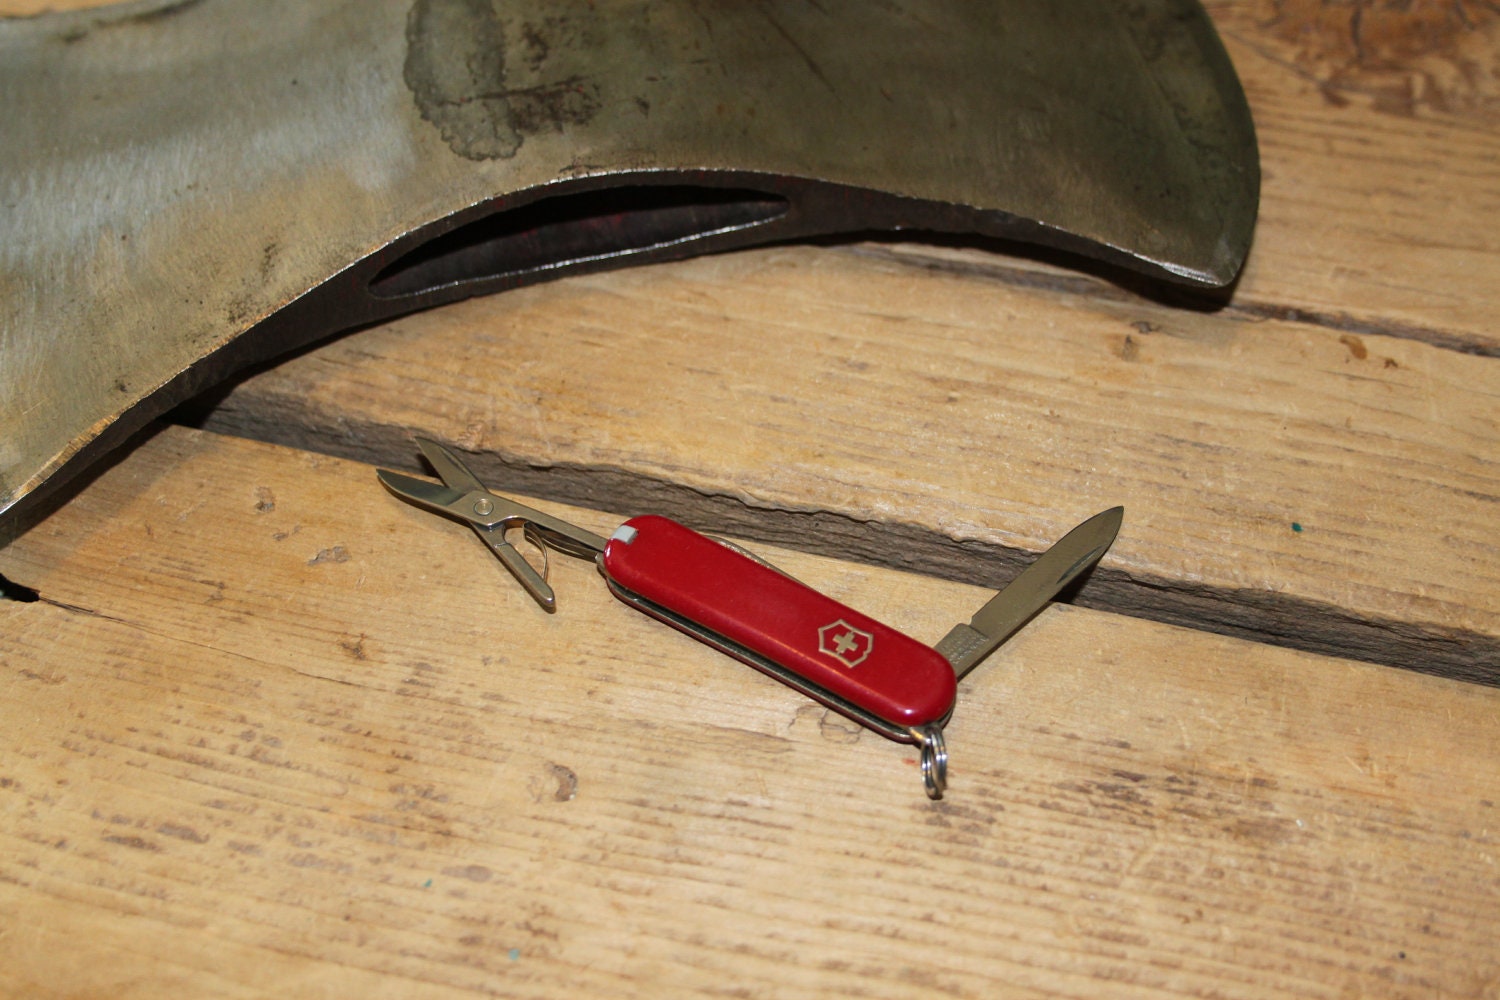 Vintage Swiss army pocket knife by UrbanGoldMiner on Etsy